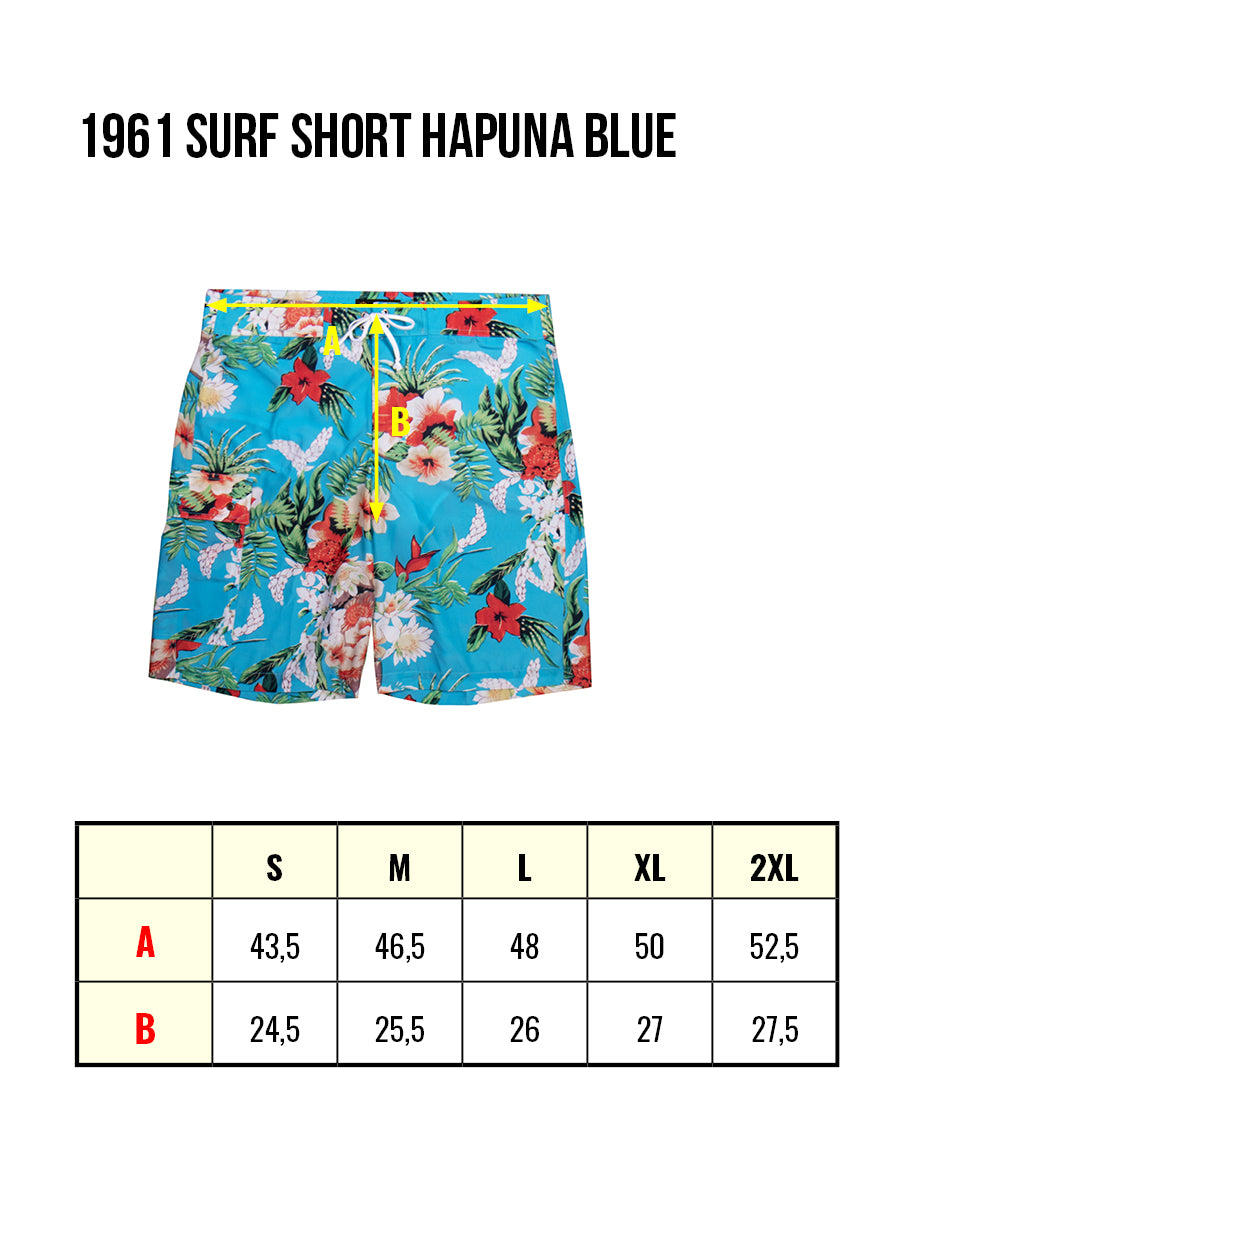 1961 Surf Short Hapuna Blue